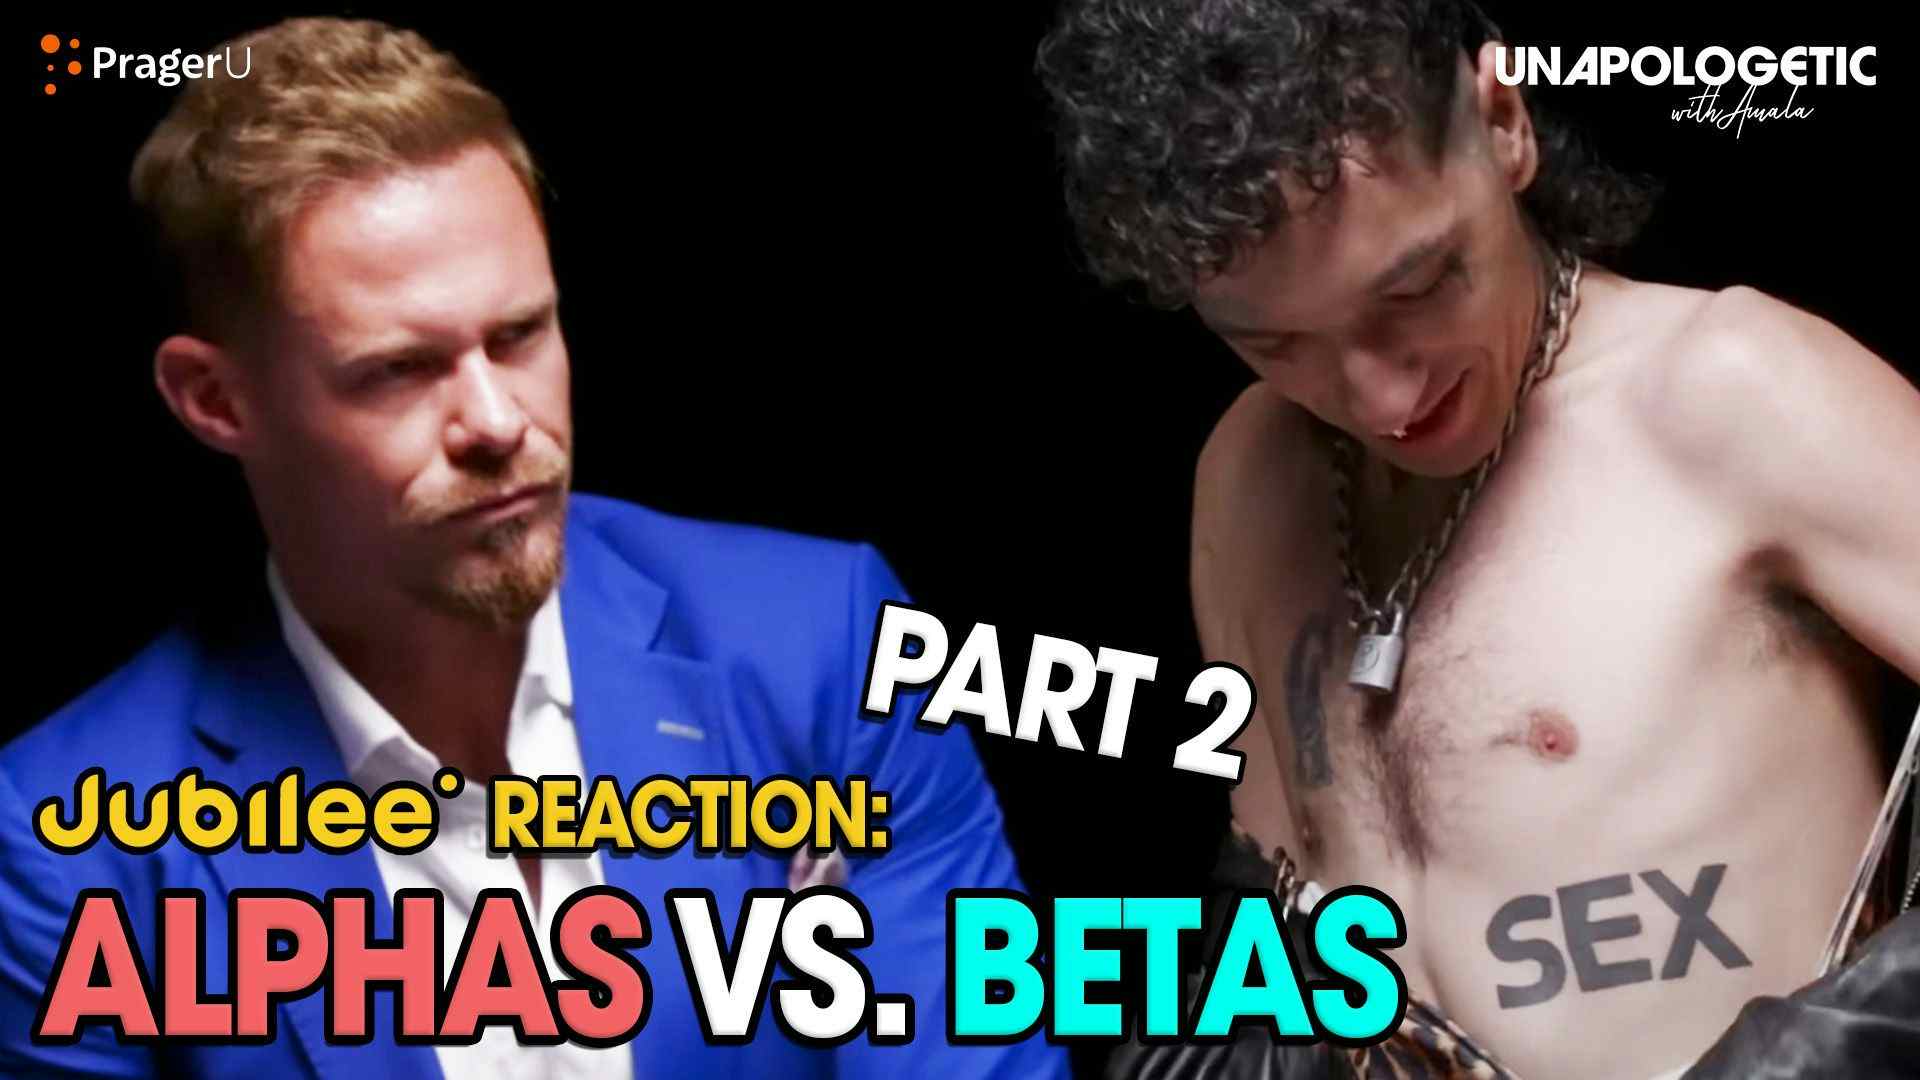 Jubilee Reaction: Alpha Males vs. Beta Males (Part 2)